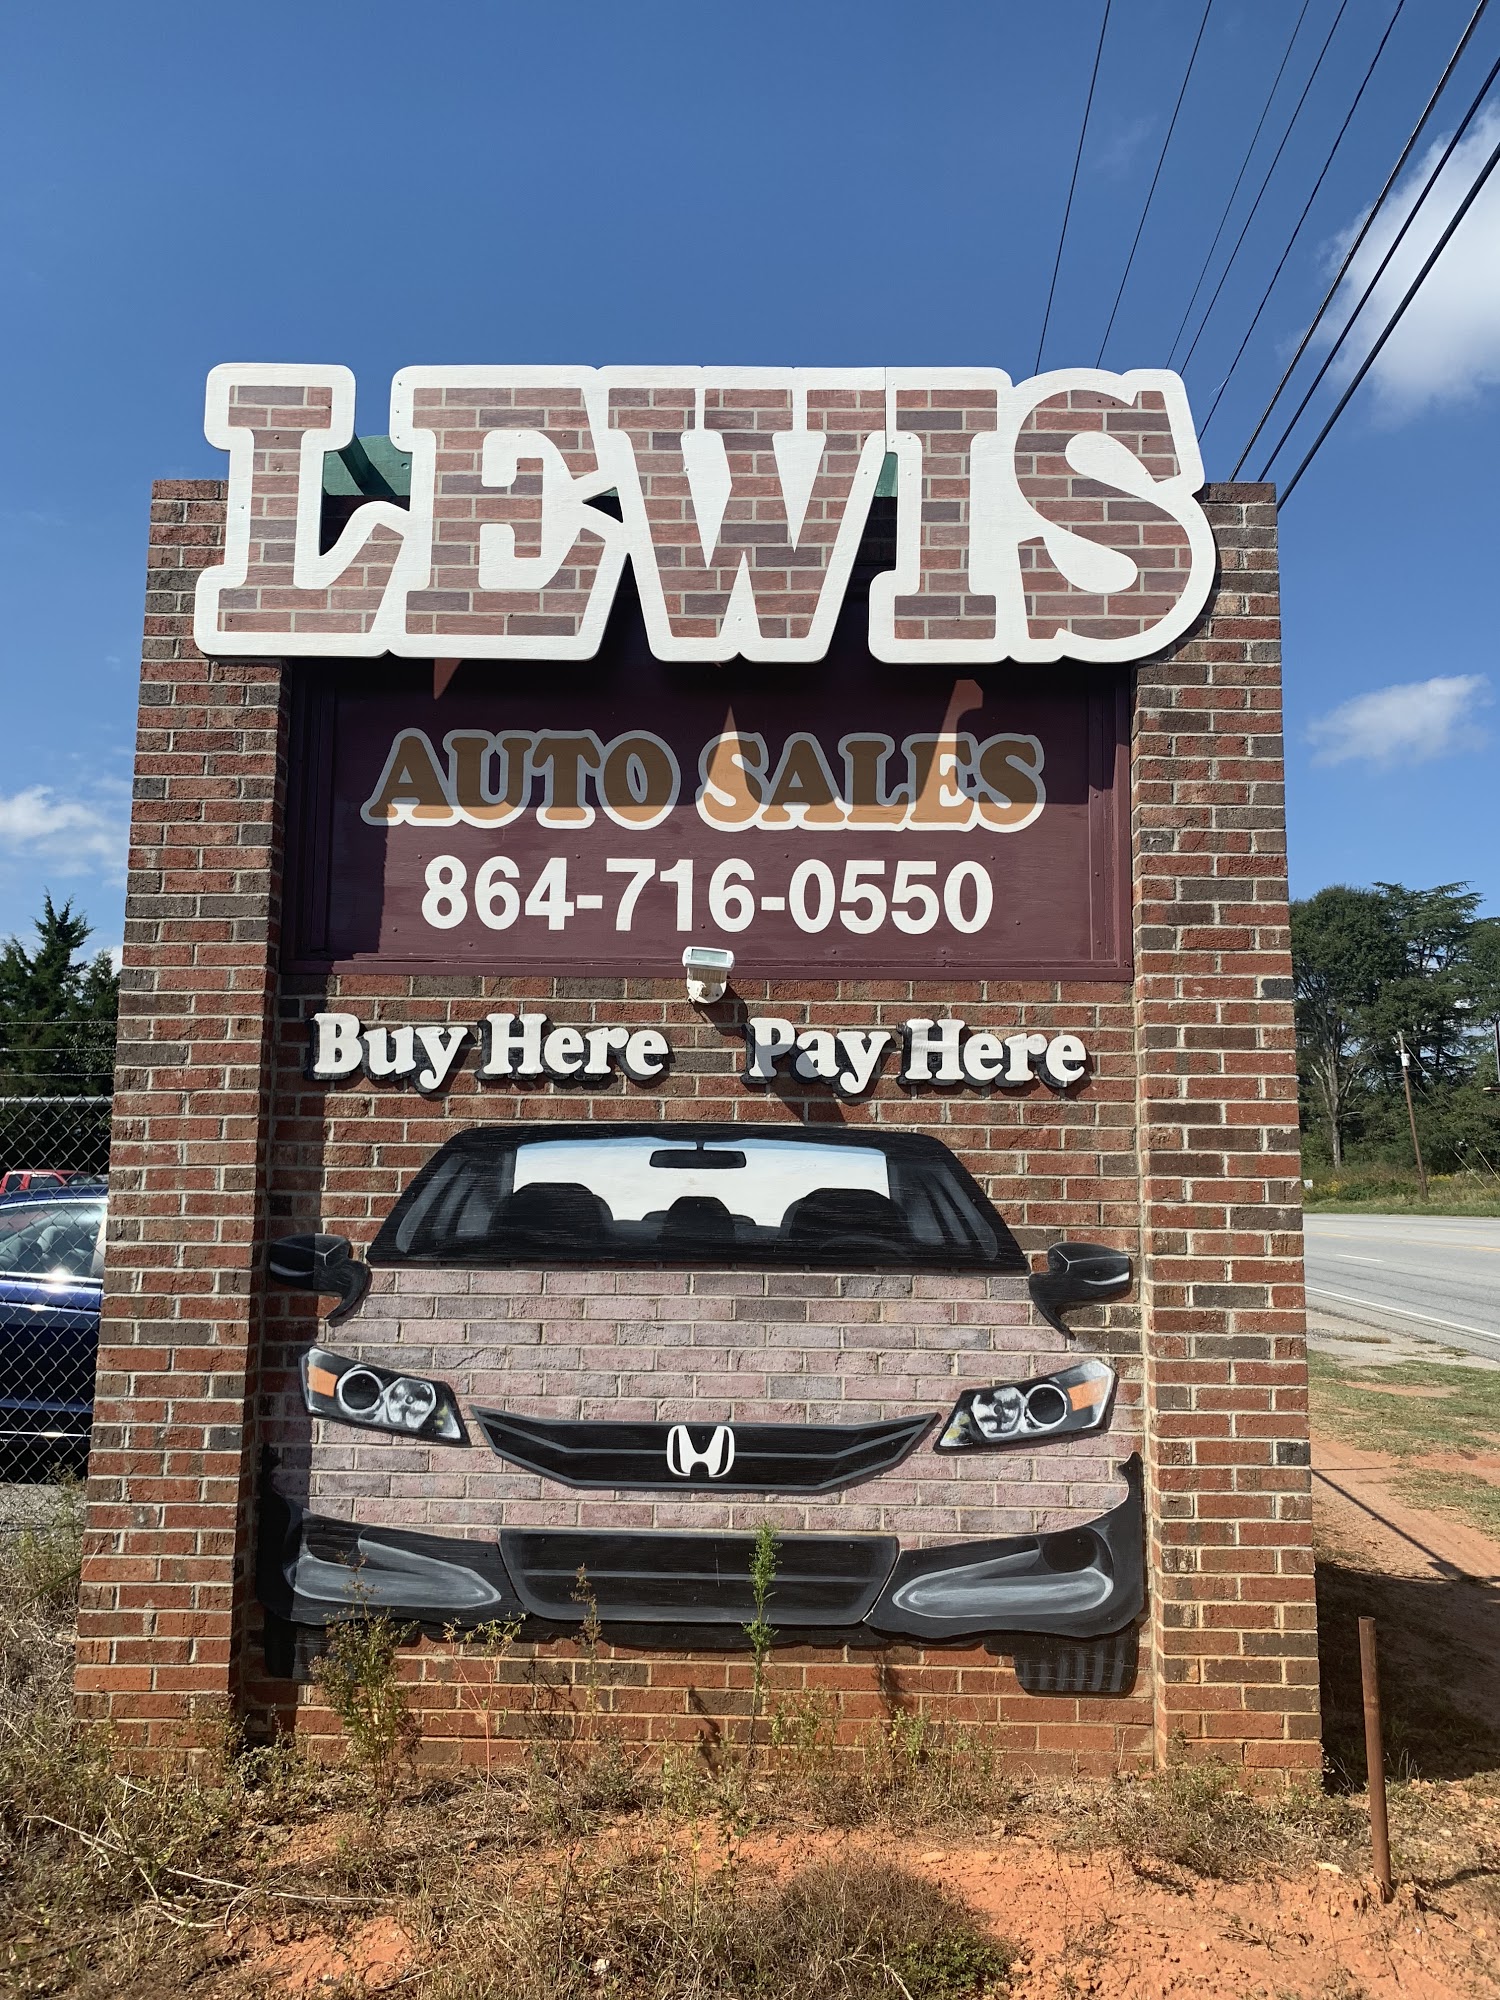 Lewis Auto Sales